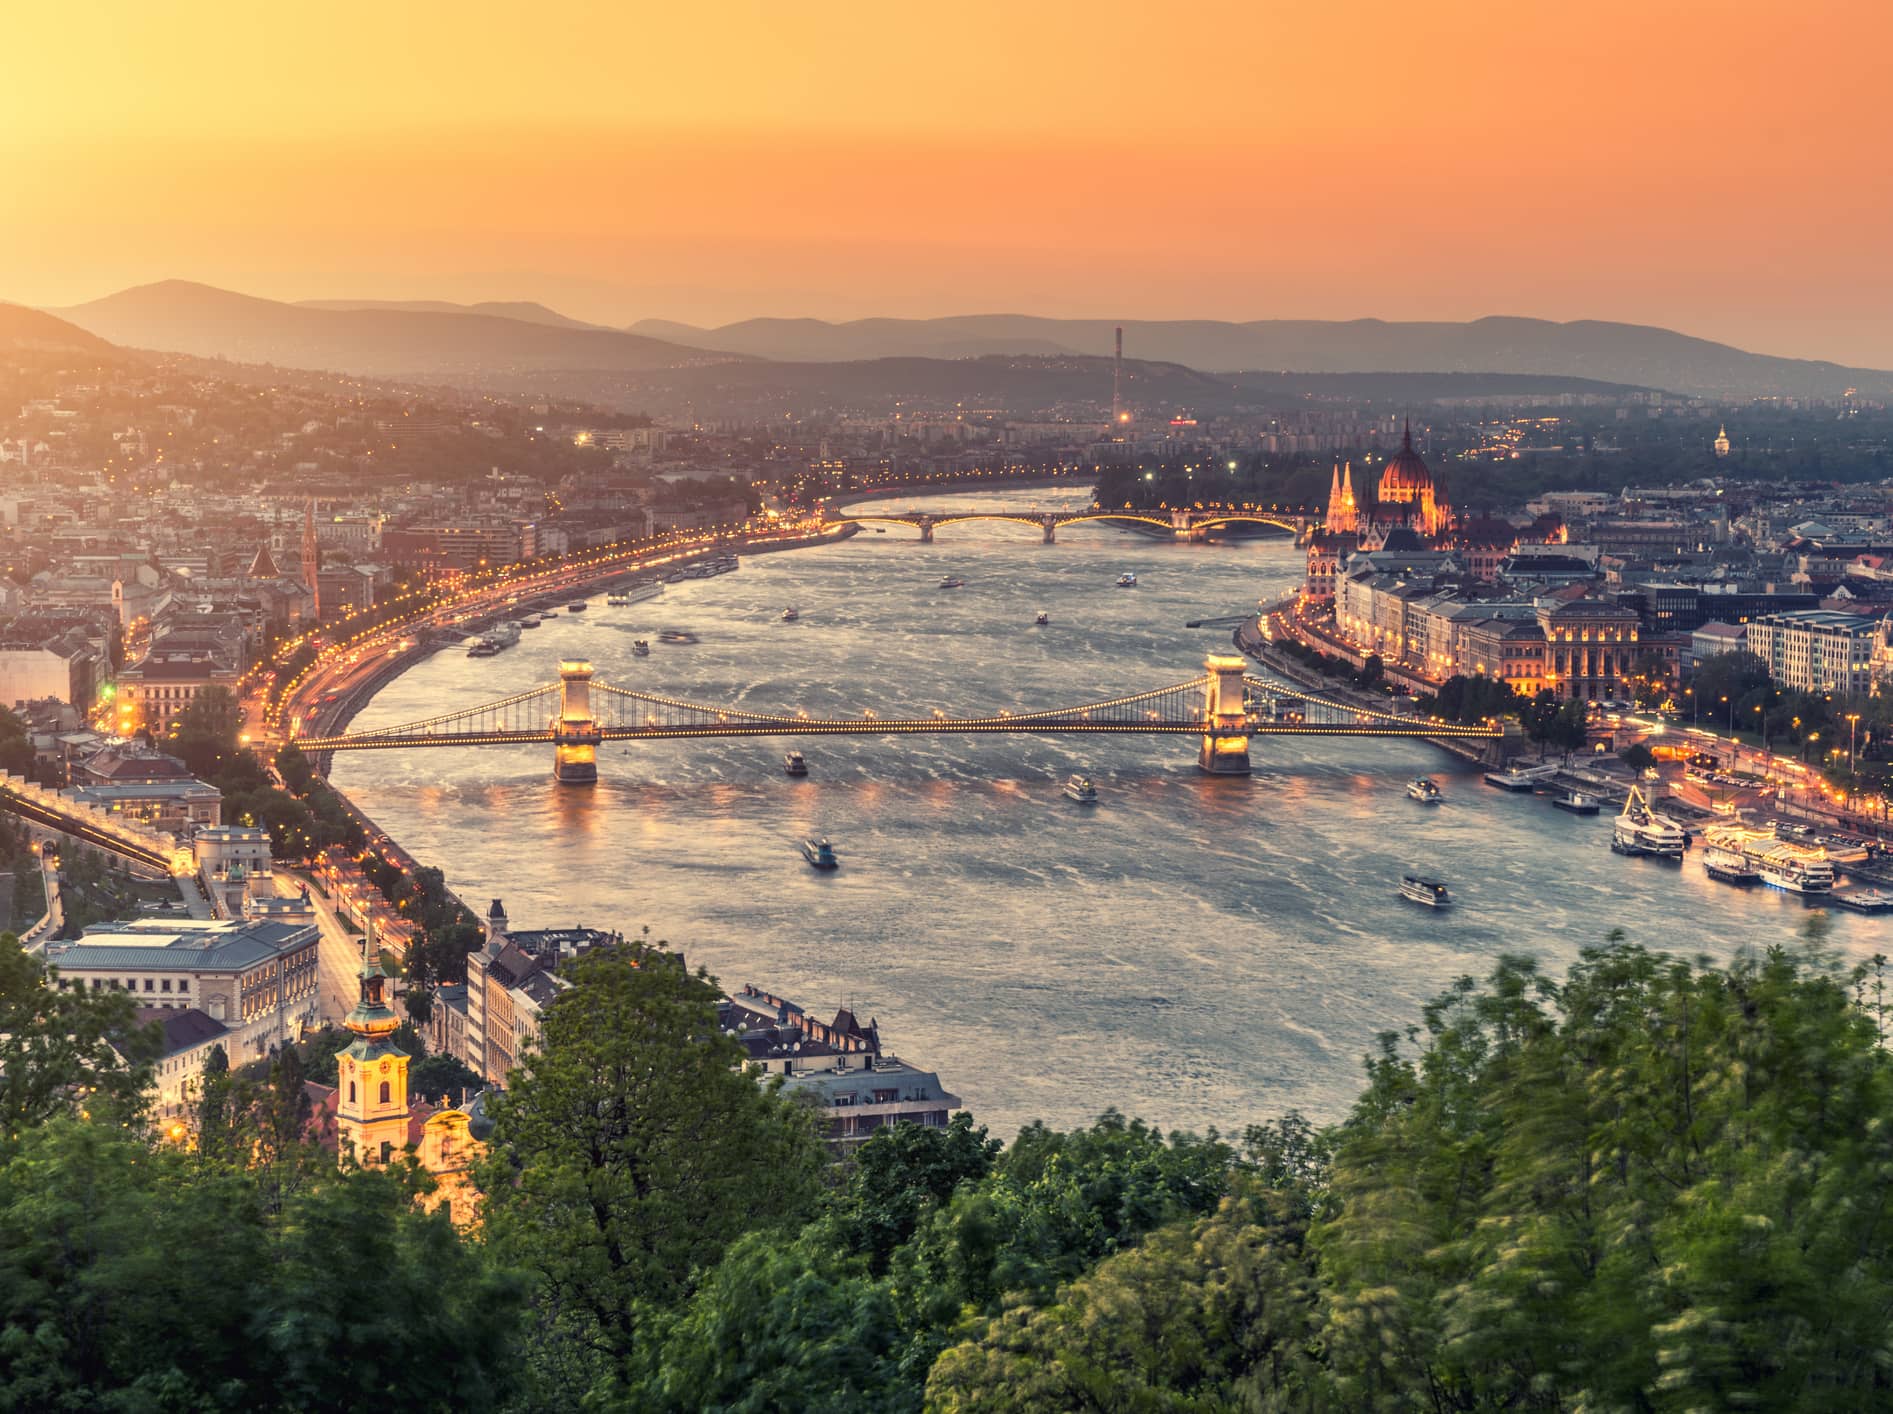  Sail down the Danube River at sunset.  